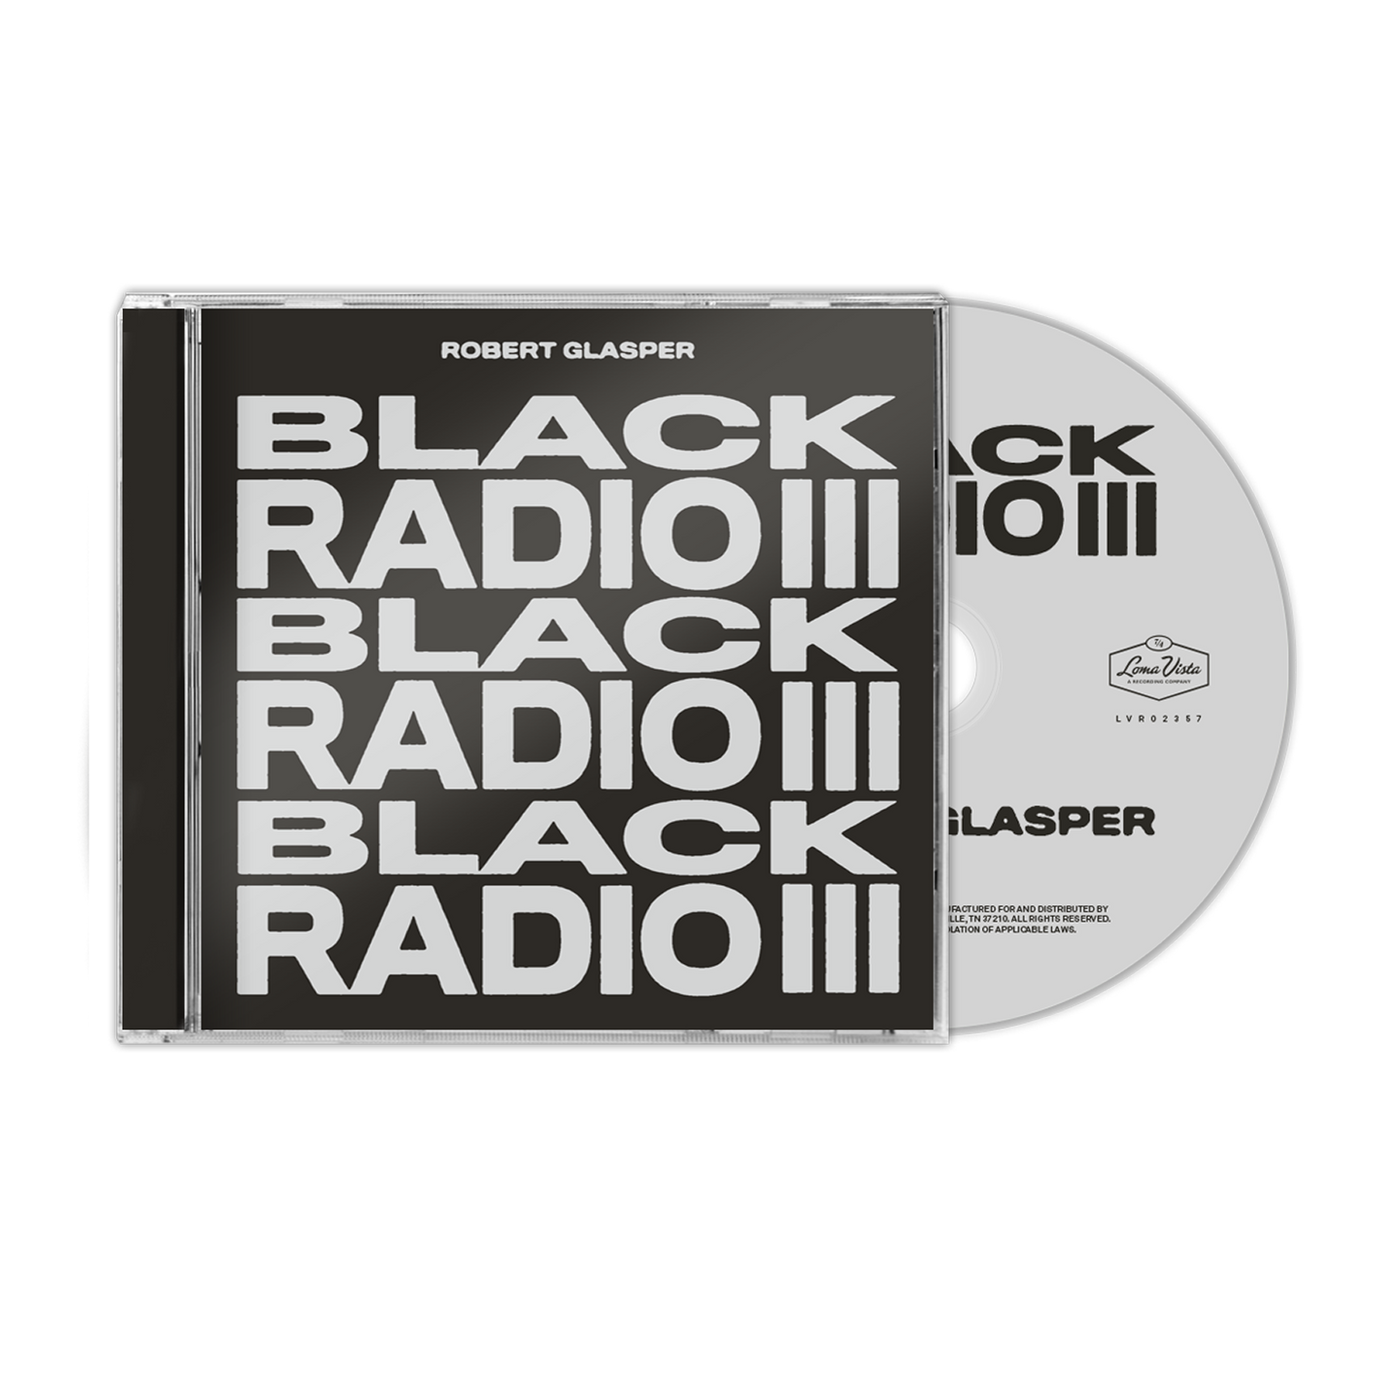 Black Radio III CD